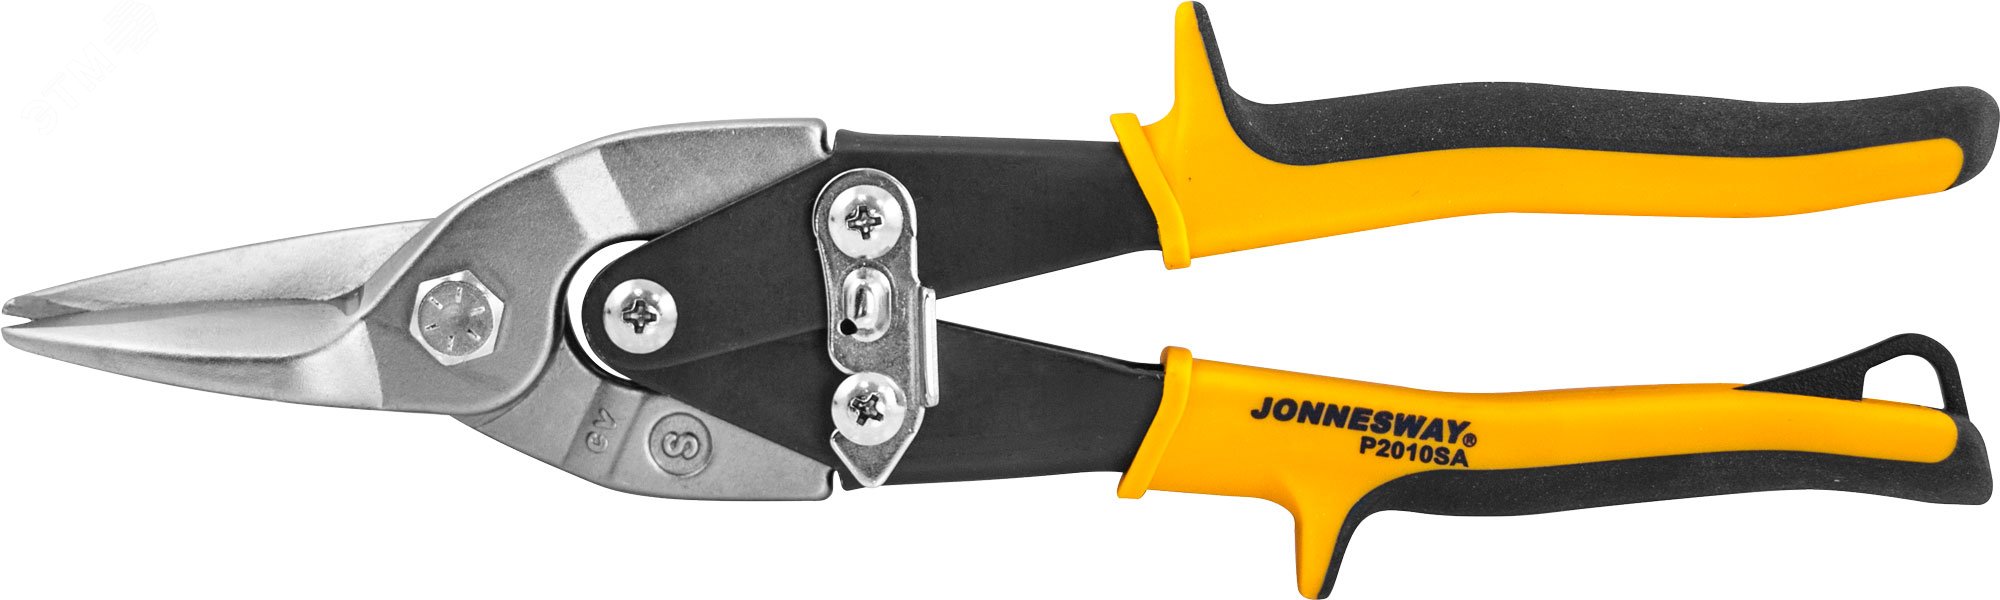 Ножницы по металлу прямого реза, 250 мм P2010SA Jonnesway